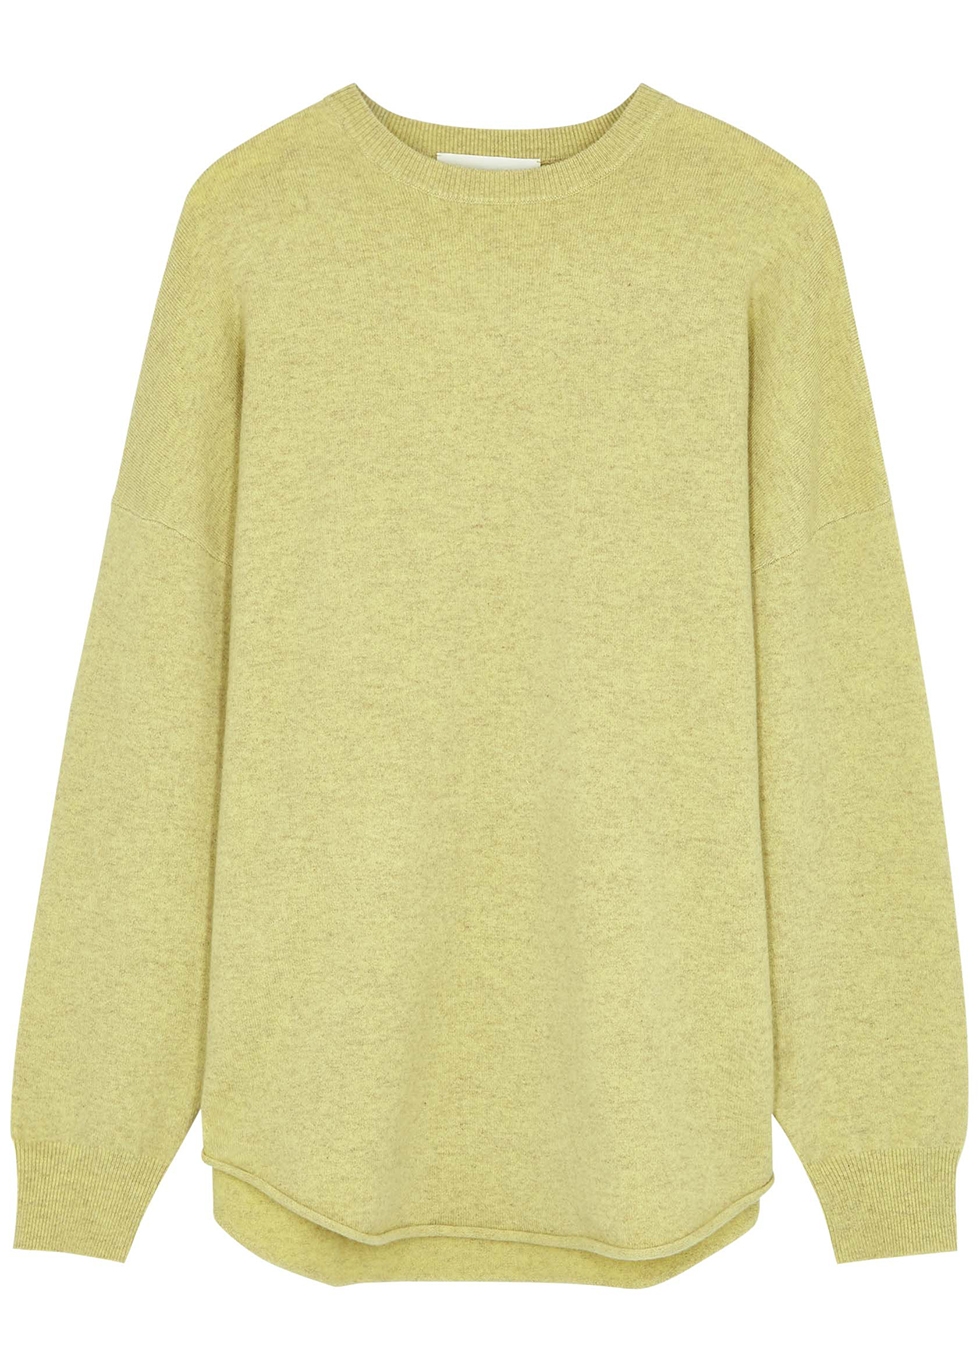 WOMEN FASHION Jumpers & Sweatshirts Chenille Primark jumper Yellow S discount 83% 